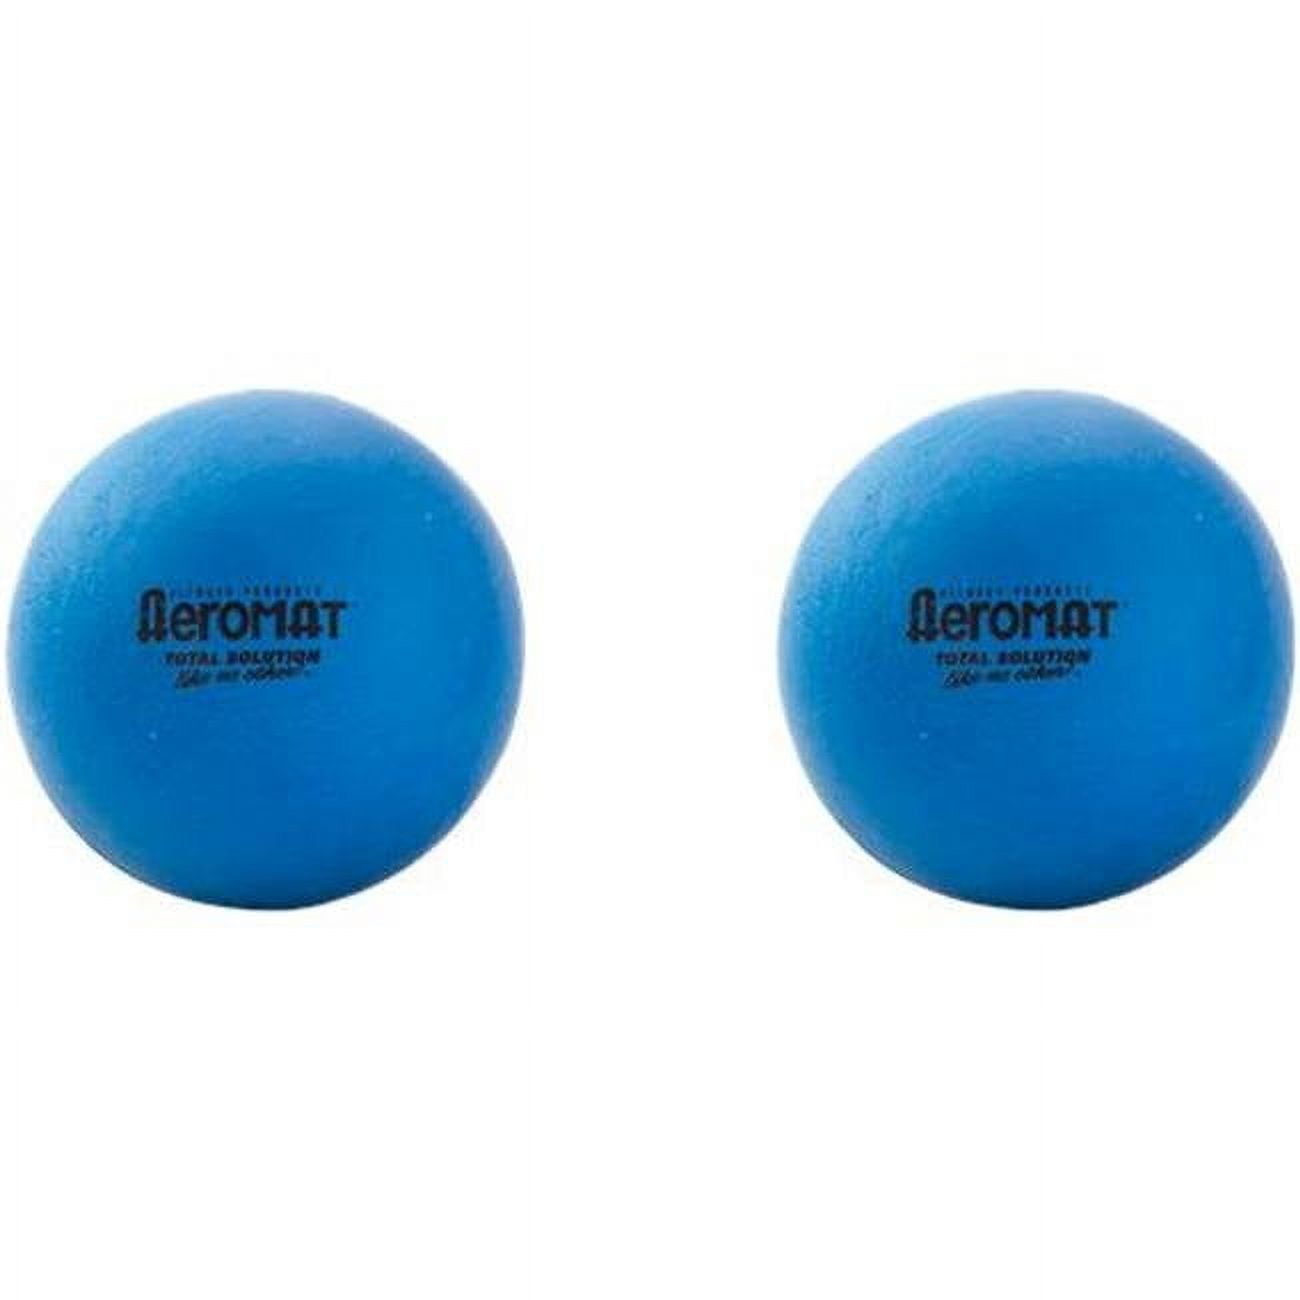 Picture of AeroMat 35310 3 in. Mini Hard Massage Ball - Blue, Soft